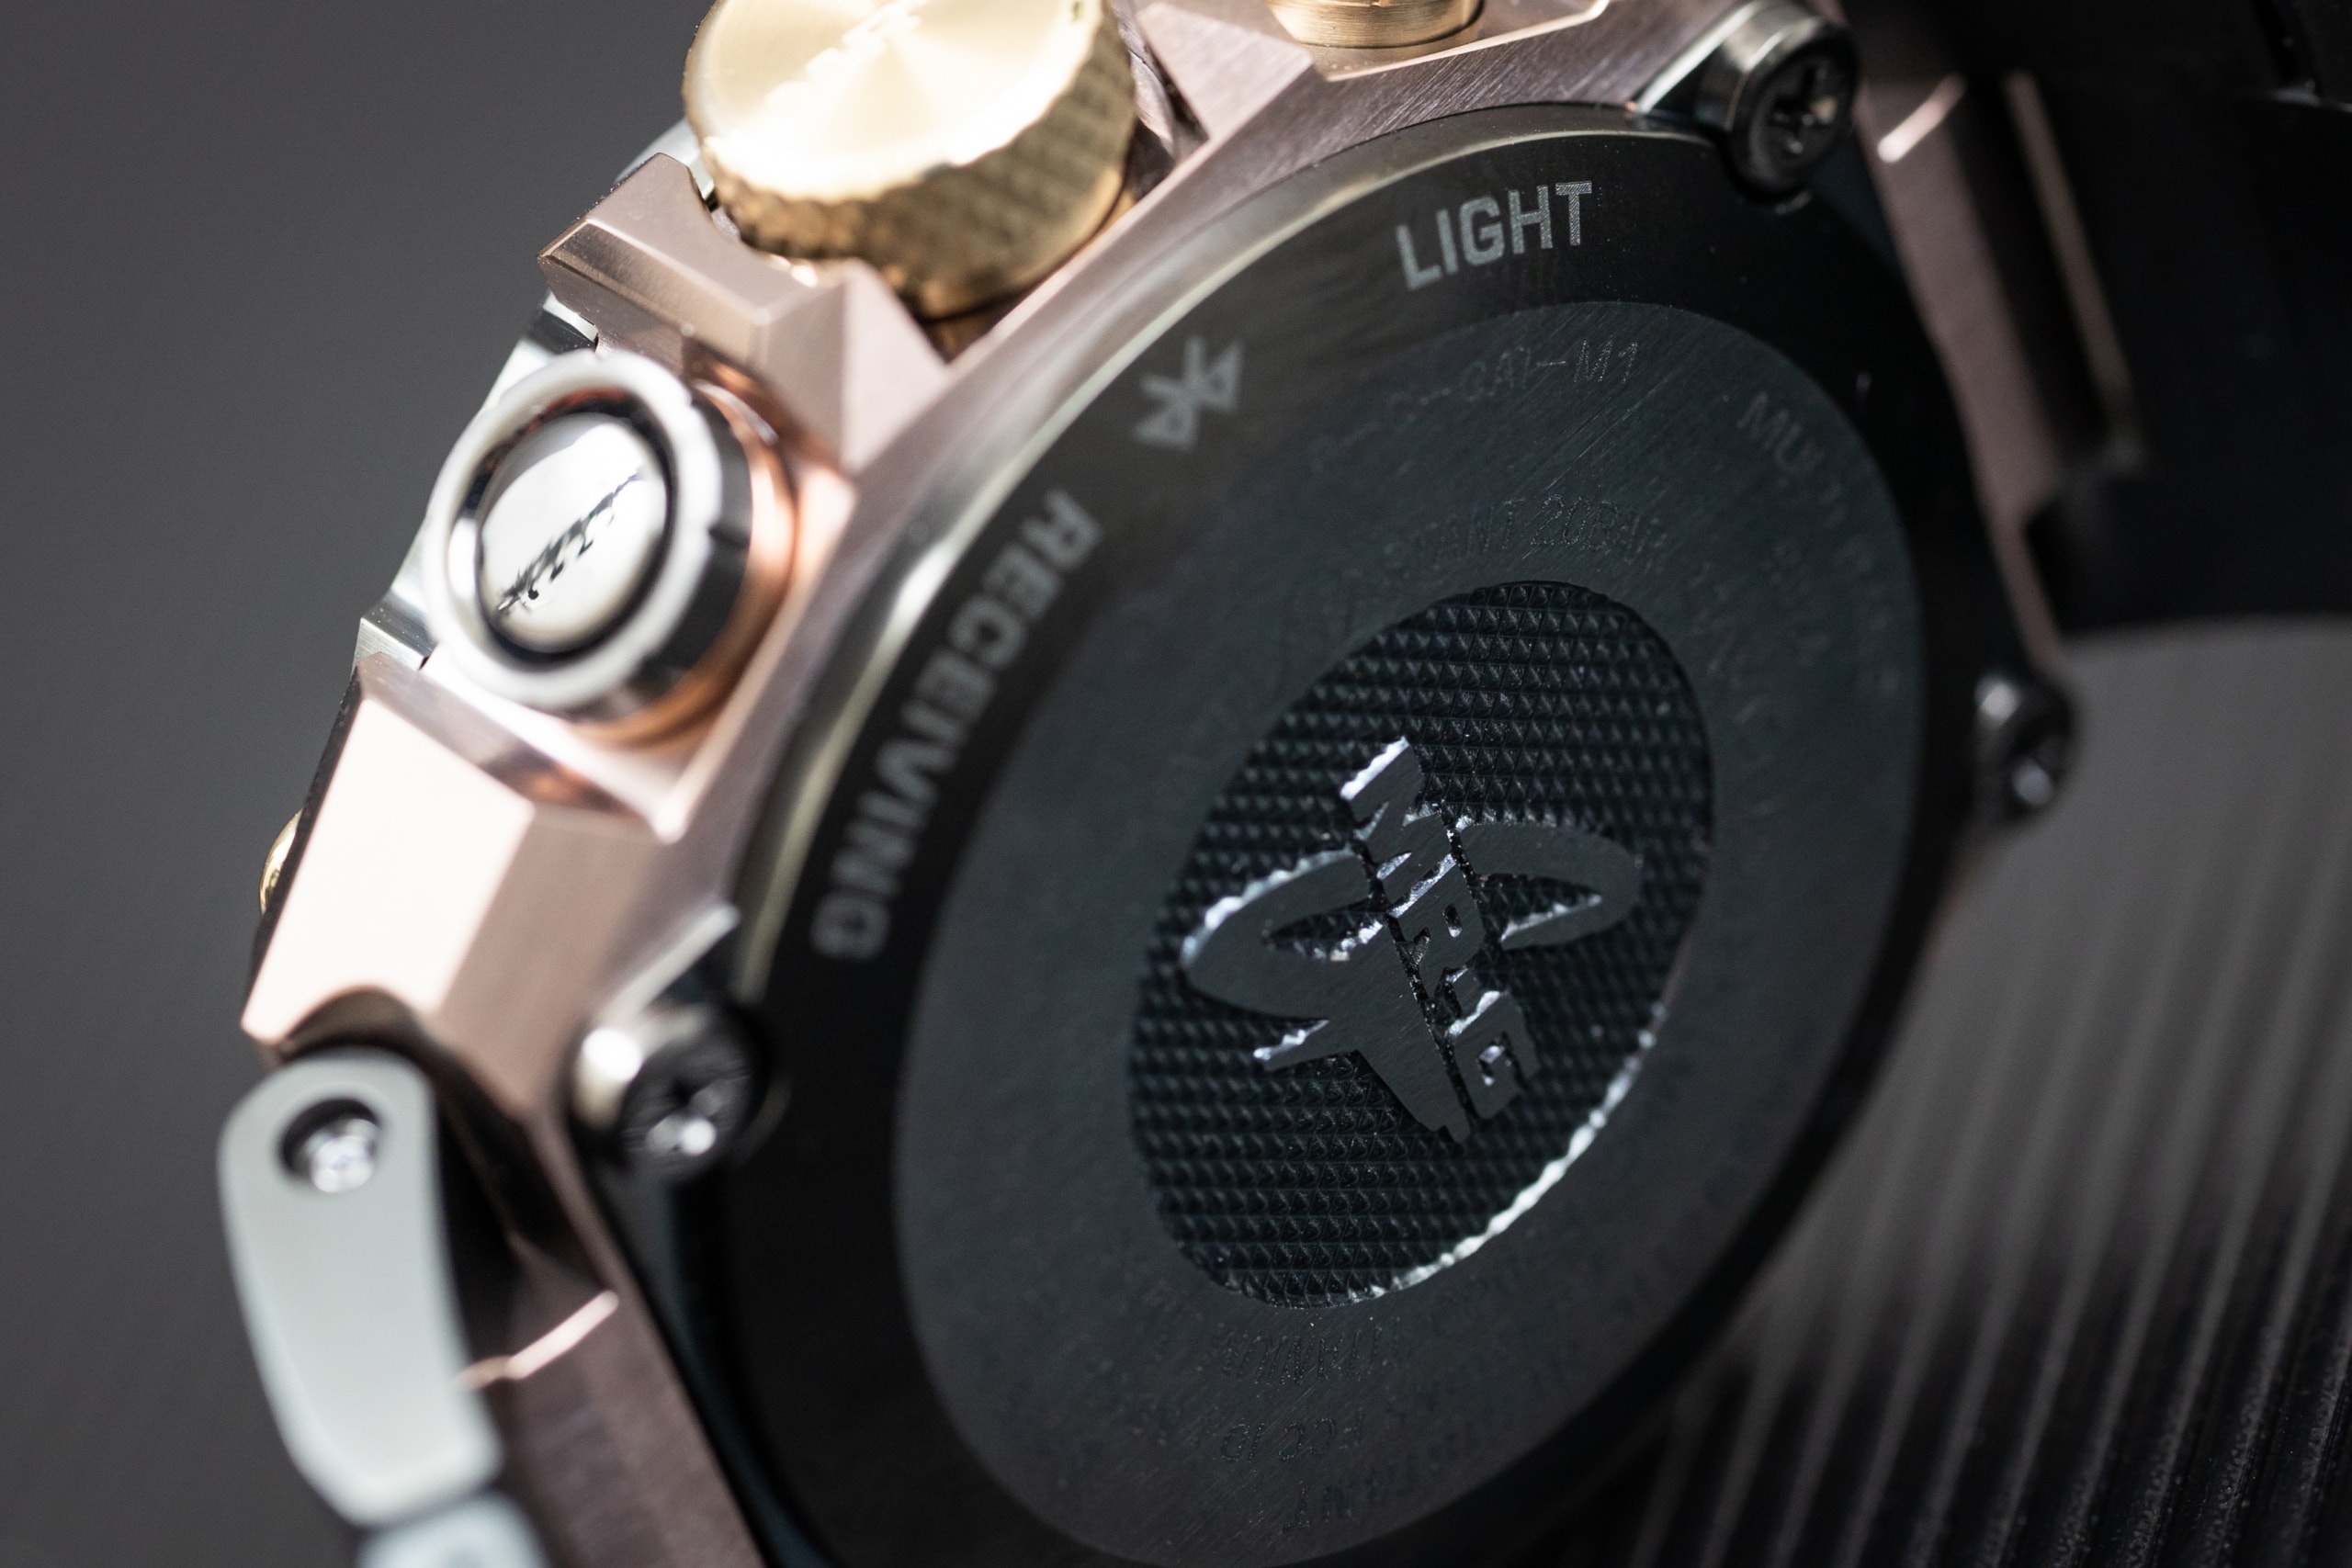 G-Shock 頂級錶型 MR-G 推出 25 週年限定版「華婆娑羅」錶款